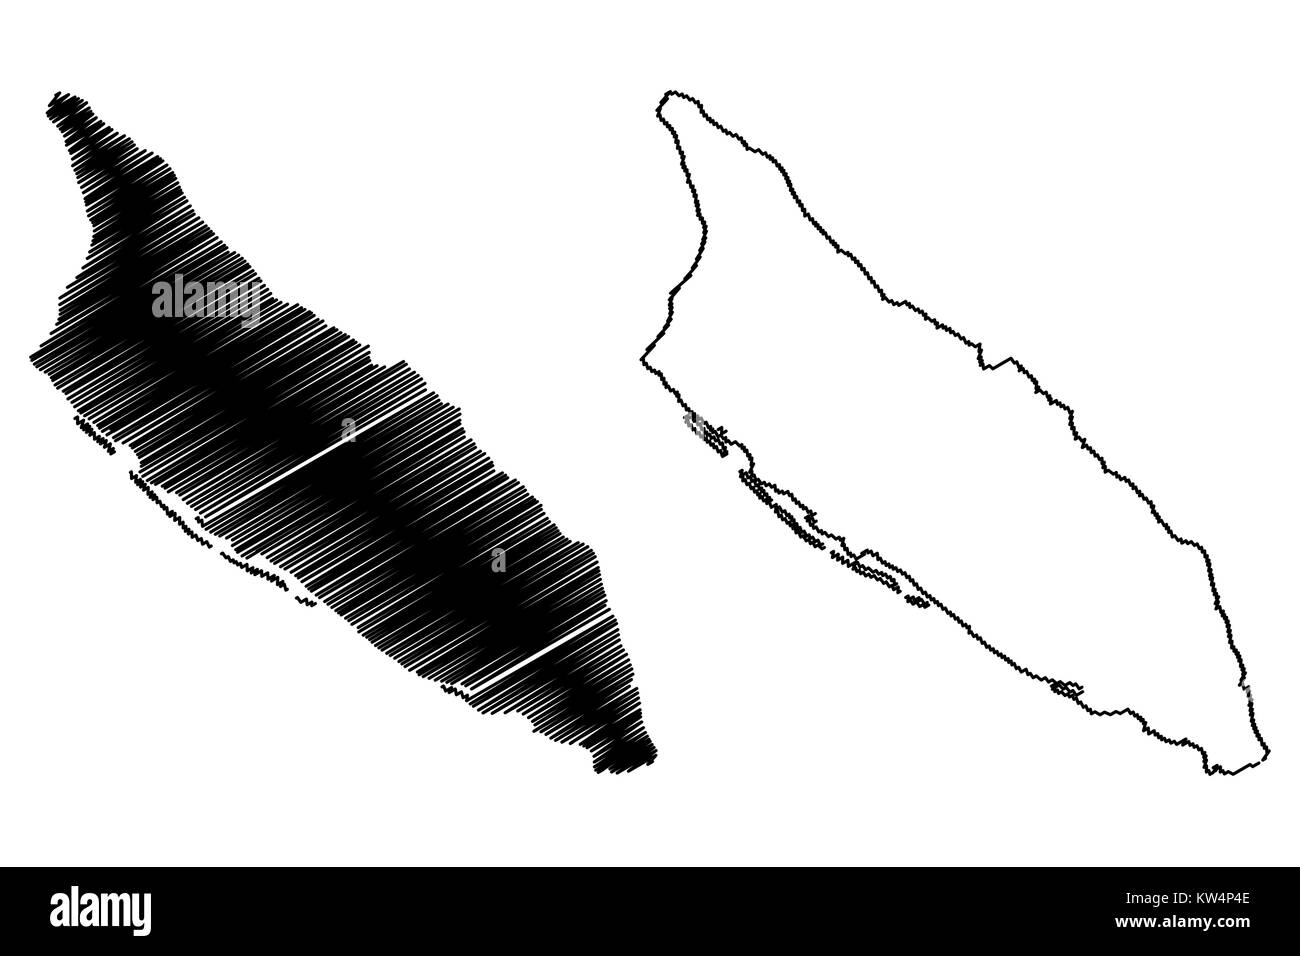 Aruba karte Vektor-illustration, kritzeln Skizze Aruba Inseln Stock Vektor